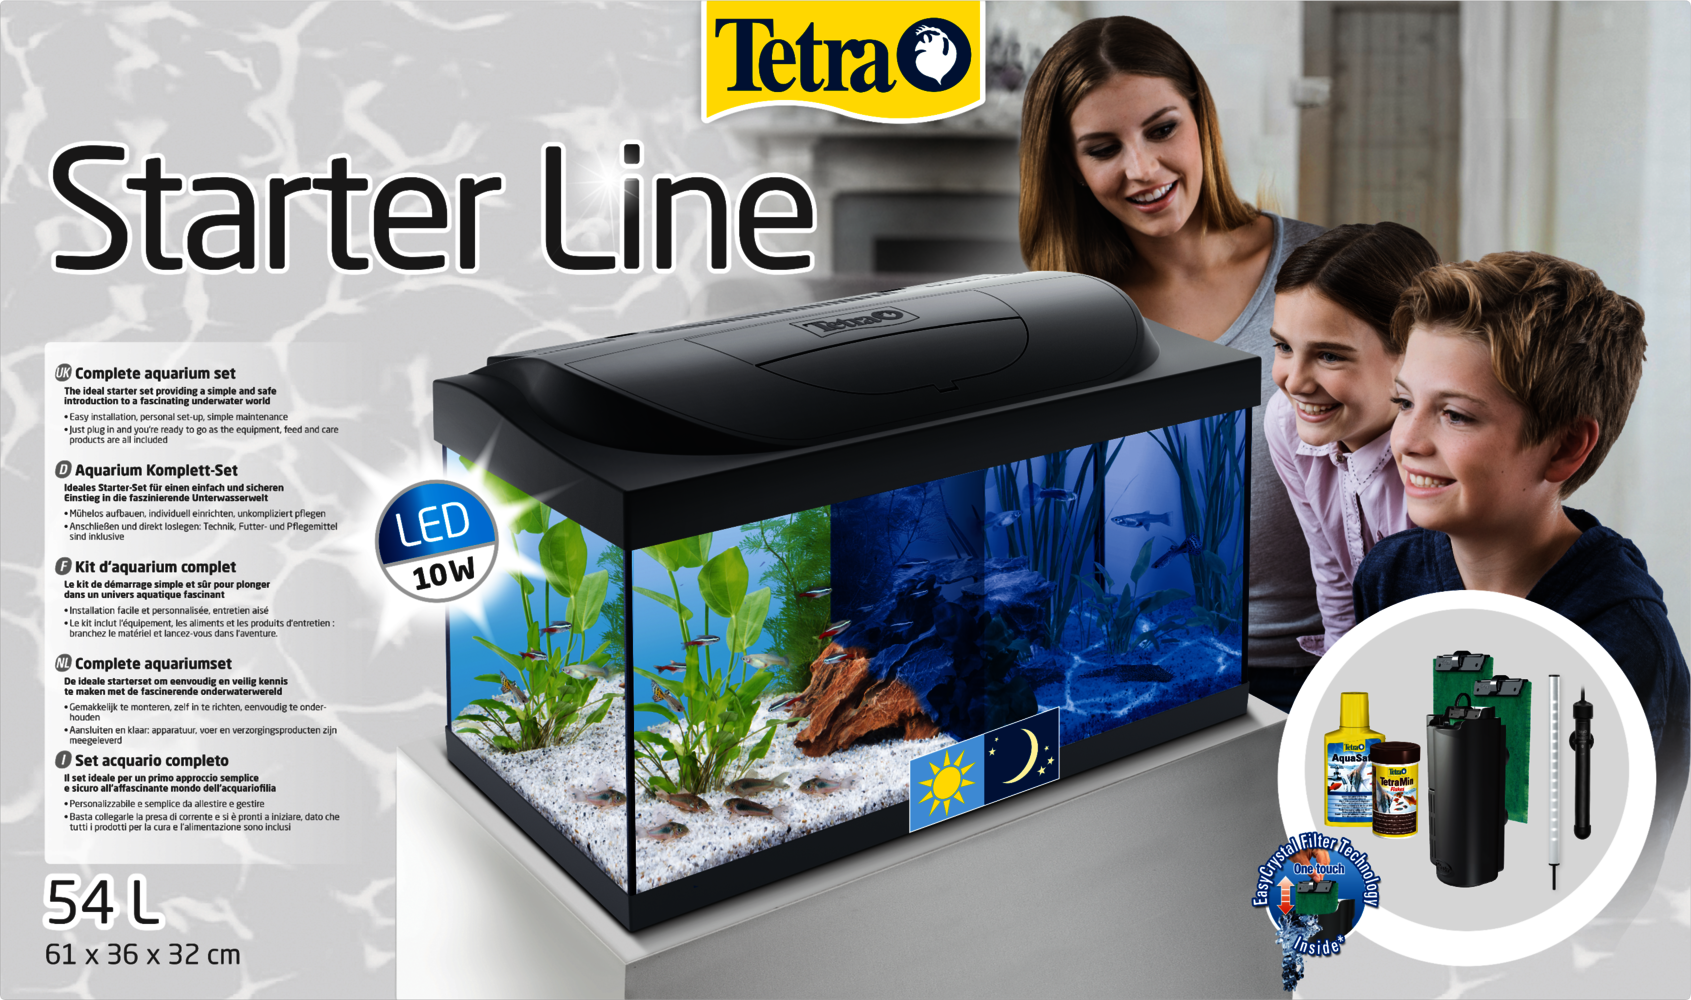 Starter LED 54L aquarium: Tetra